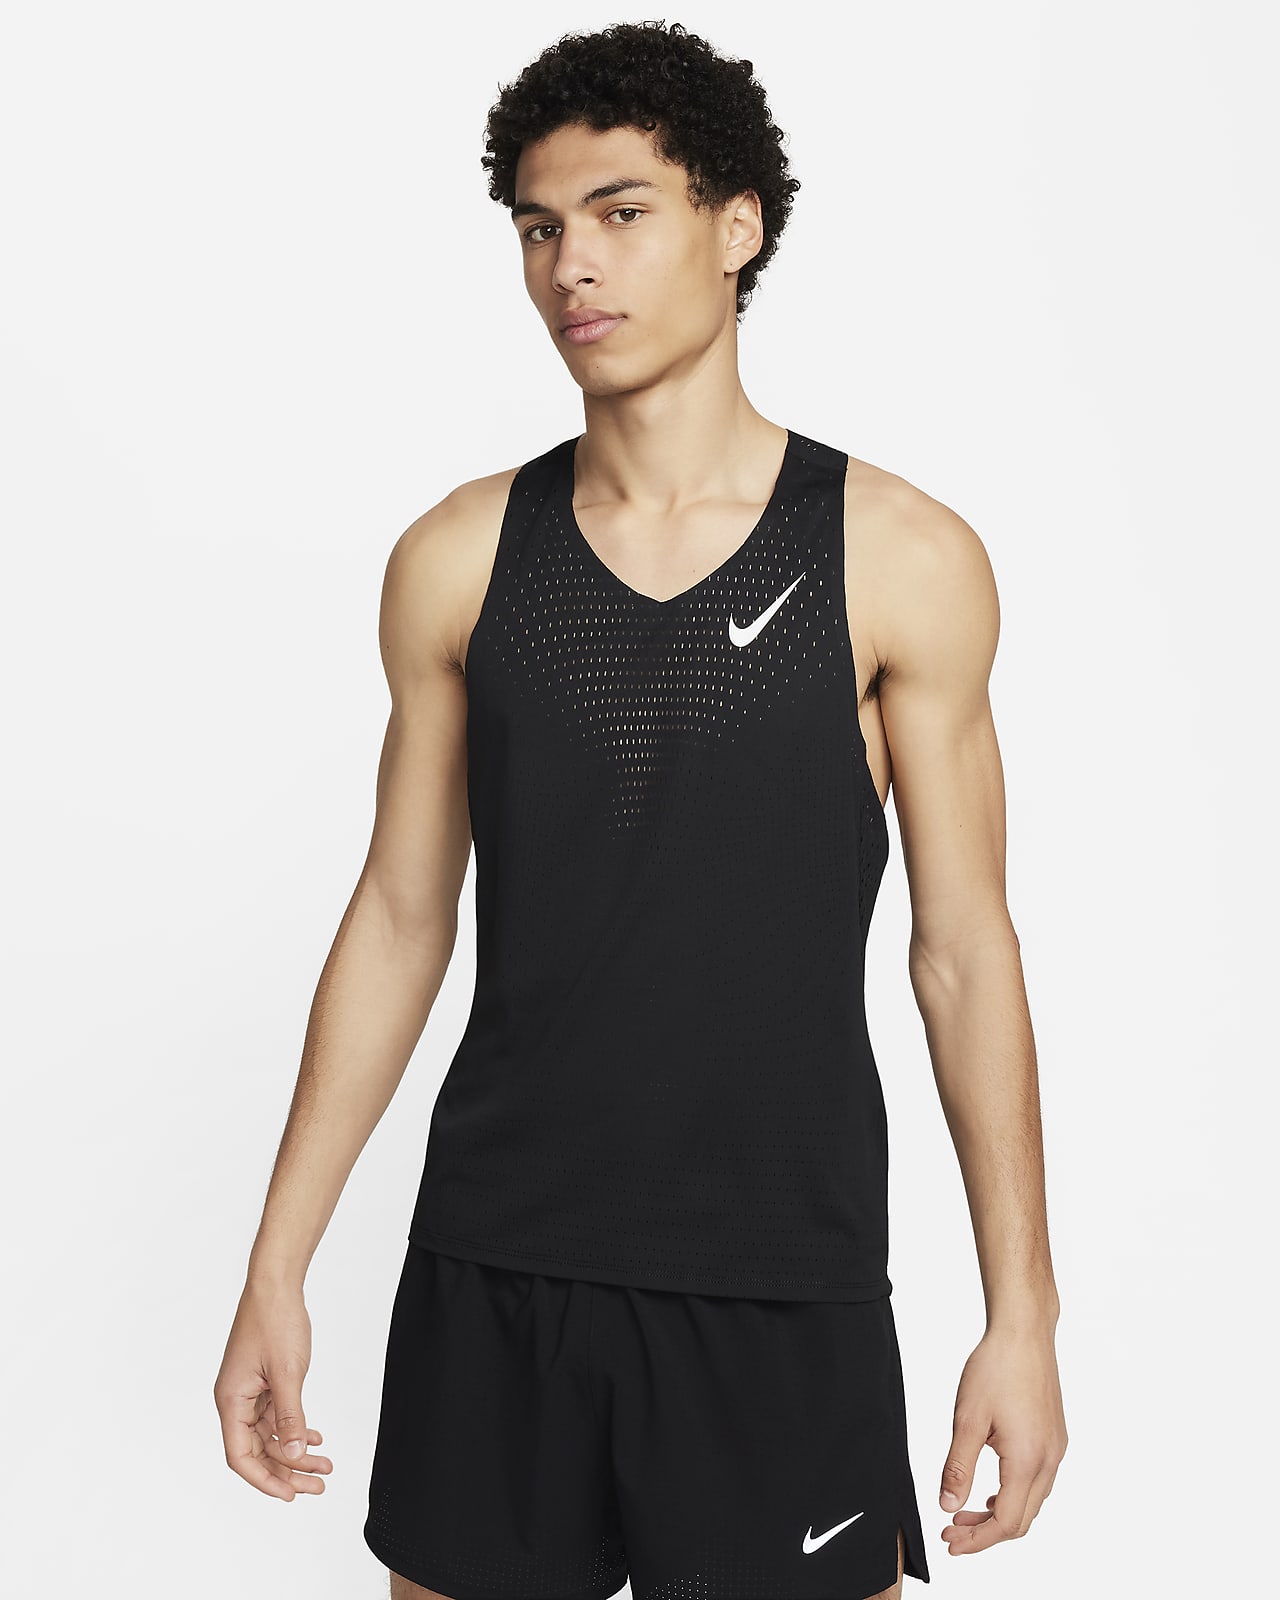 FINNISH] Unboxing I Nike AeroSwift Men's 5cm Running Shorts I